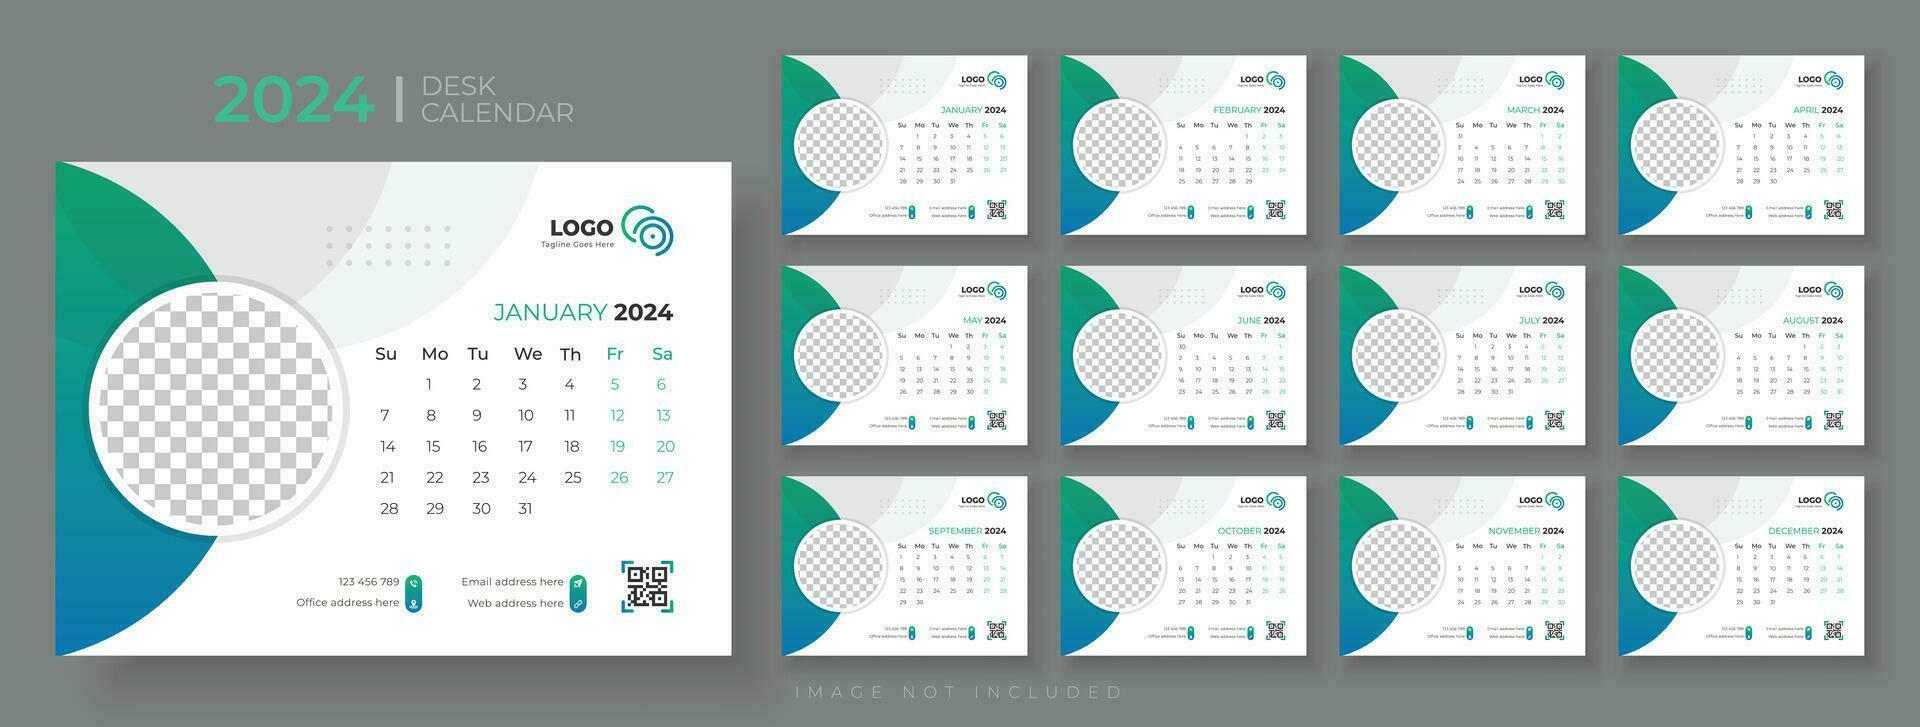 Desk Calendar 2024 template design, Office Calendar 2024,Week Starts on sunday, Planner for 2024 year, template for annual calendar 2024 vector